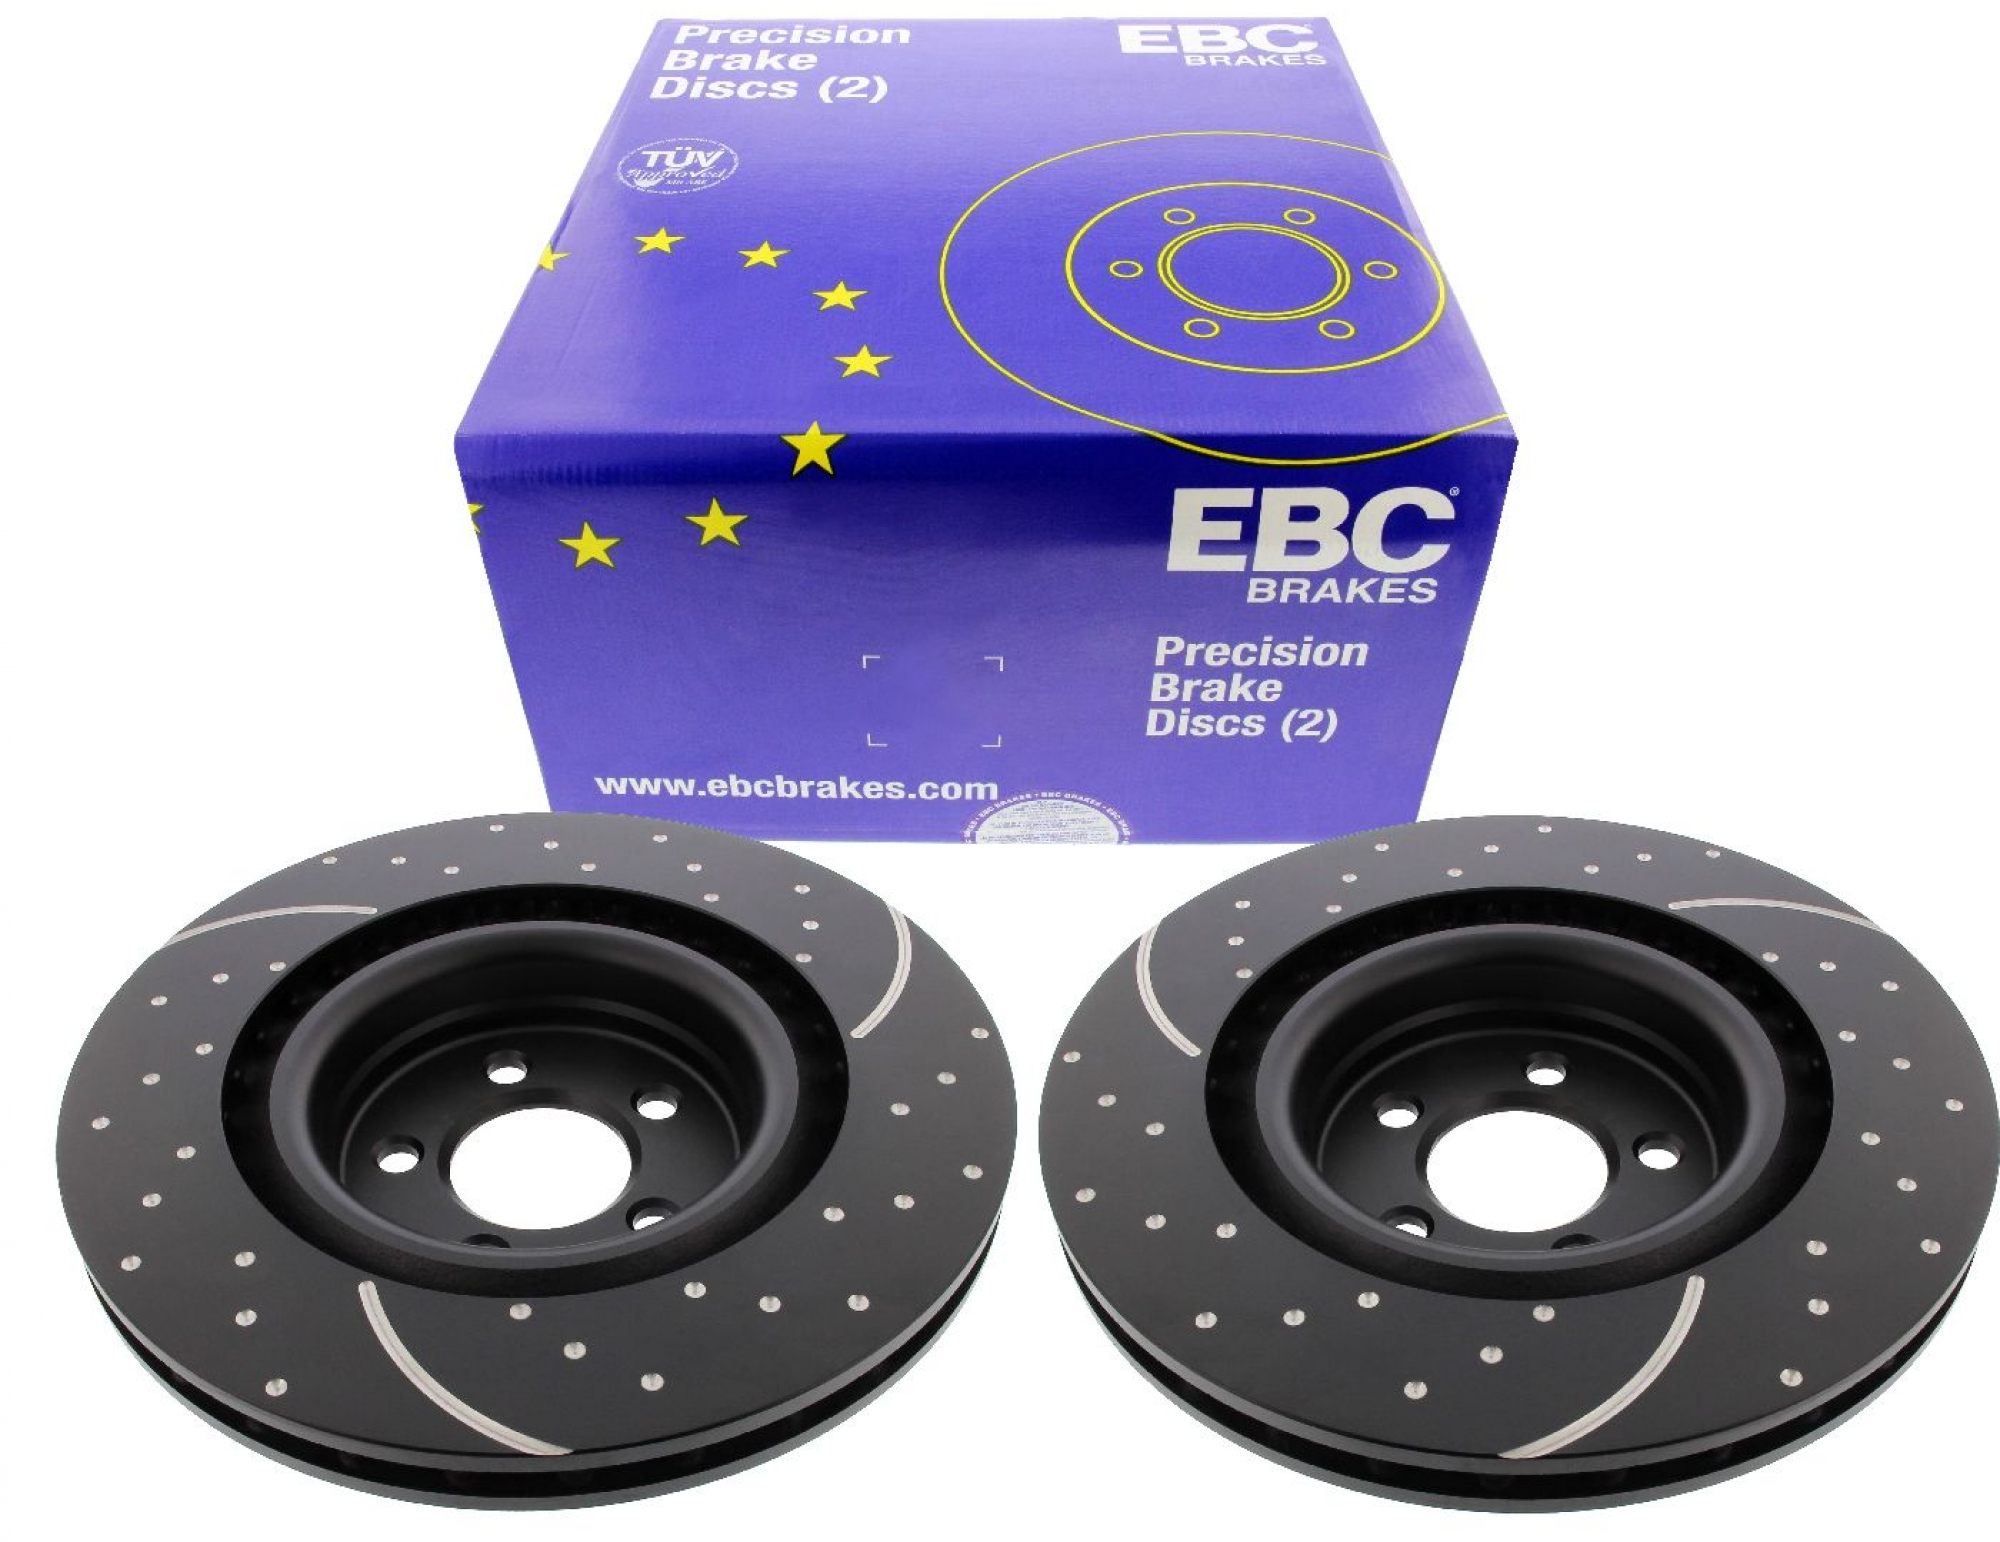 EBC-Bremsscheiben, Turbo Groove Disc Black (2-teilig), VA, Chrysler, Dodge (360mm)